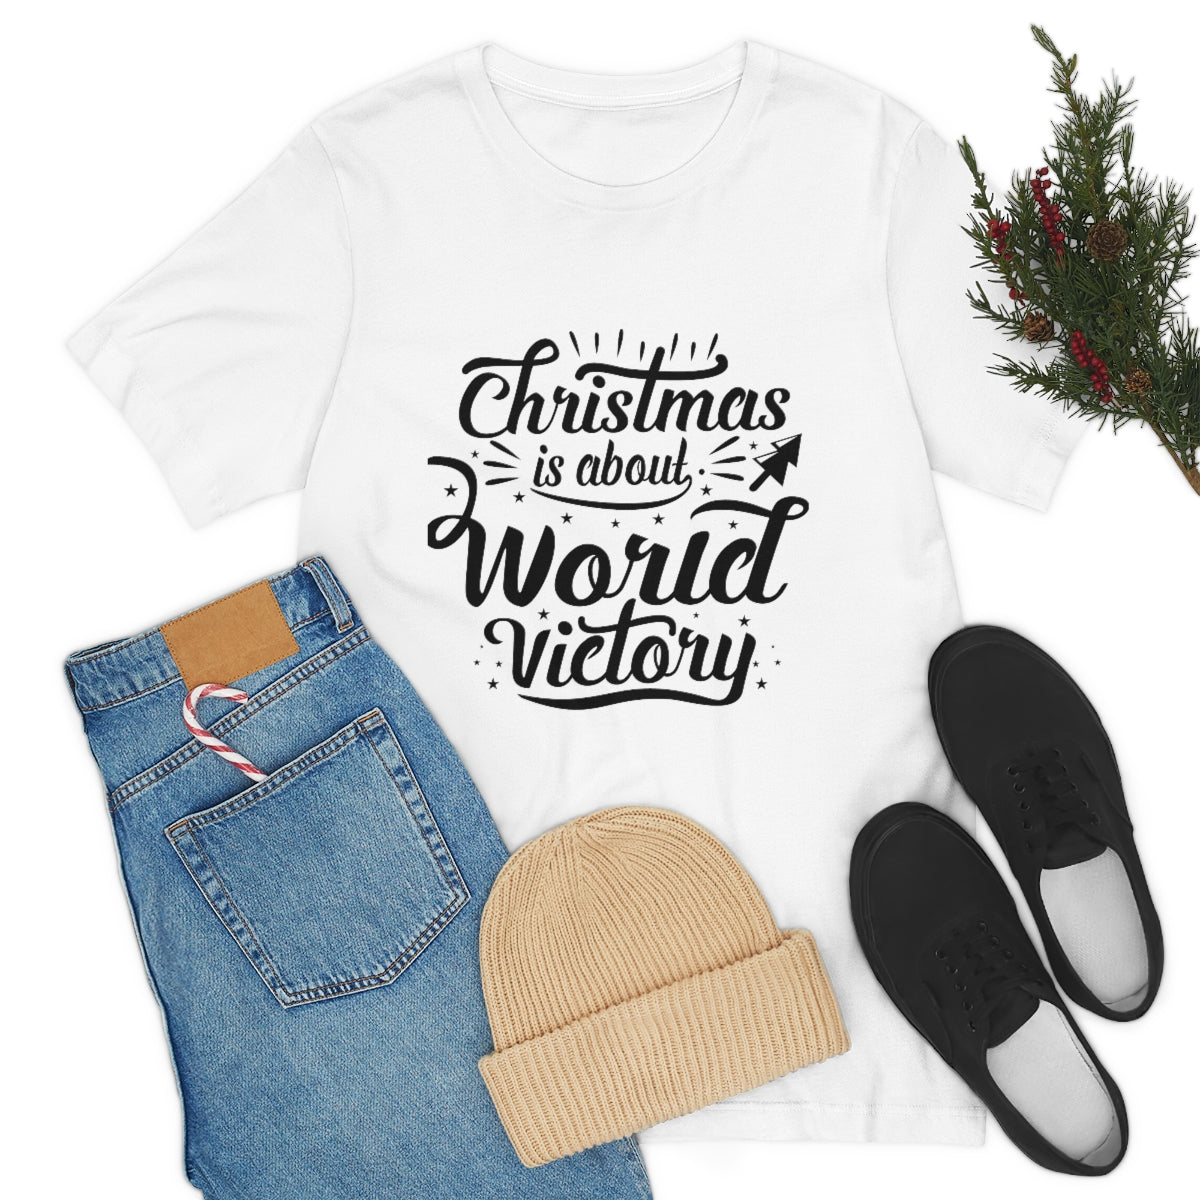 World victory Christmas Tee, Christmas T-shirt, Merry Christmas T-shirt, Unisex T-shirts, Unisex jersey short sleeve tee